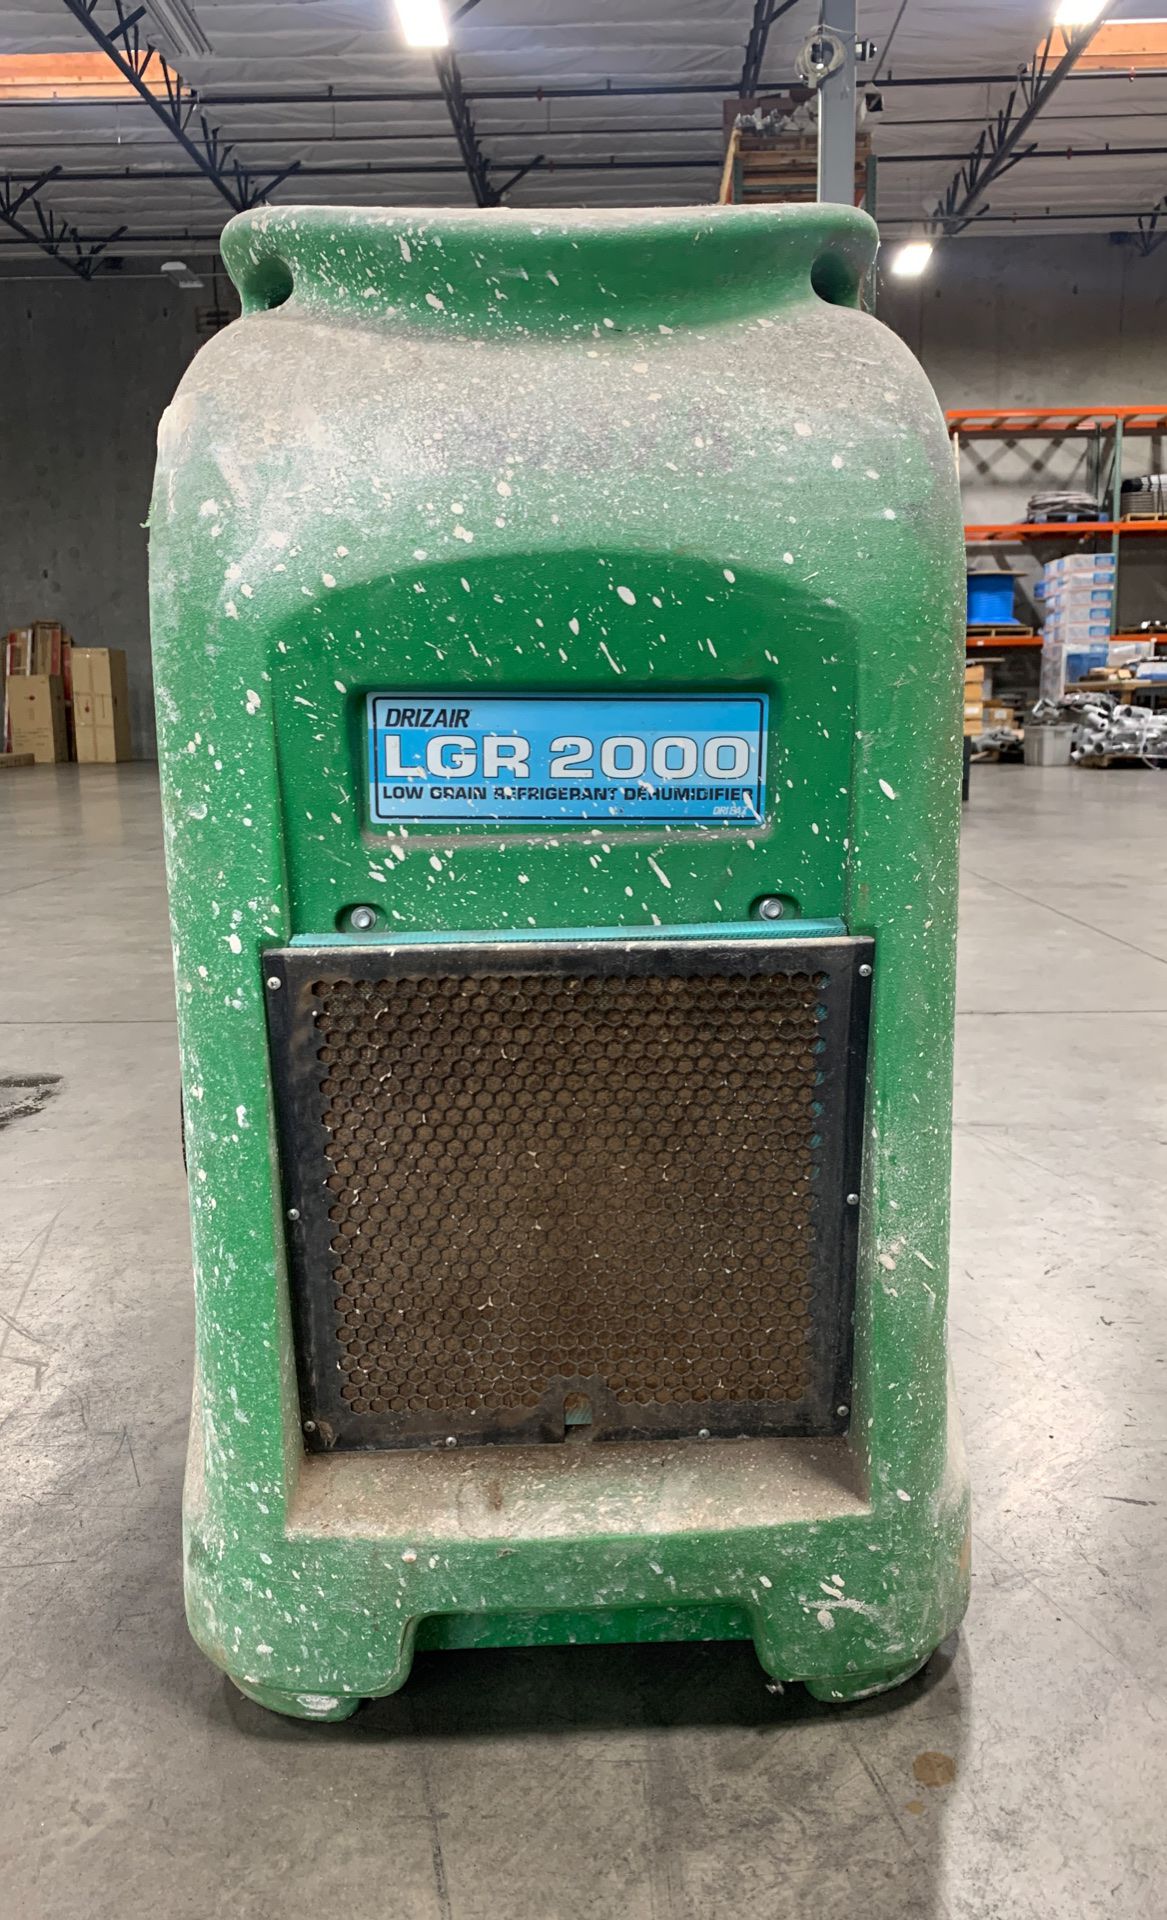 LGR 2000 dehumidifier